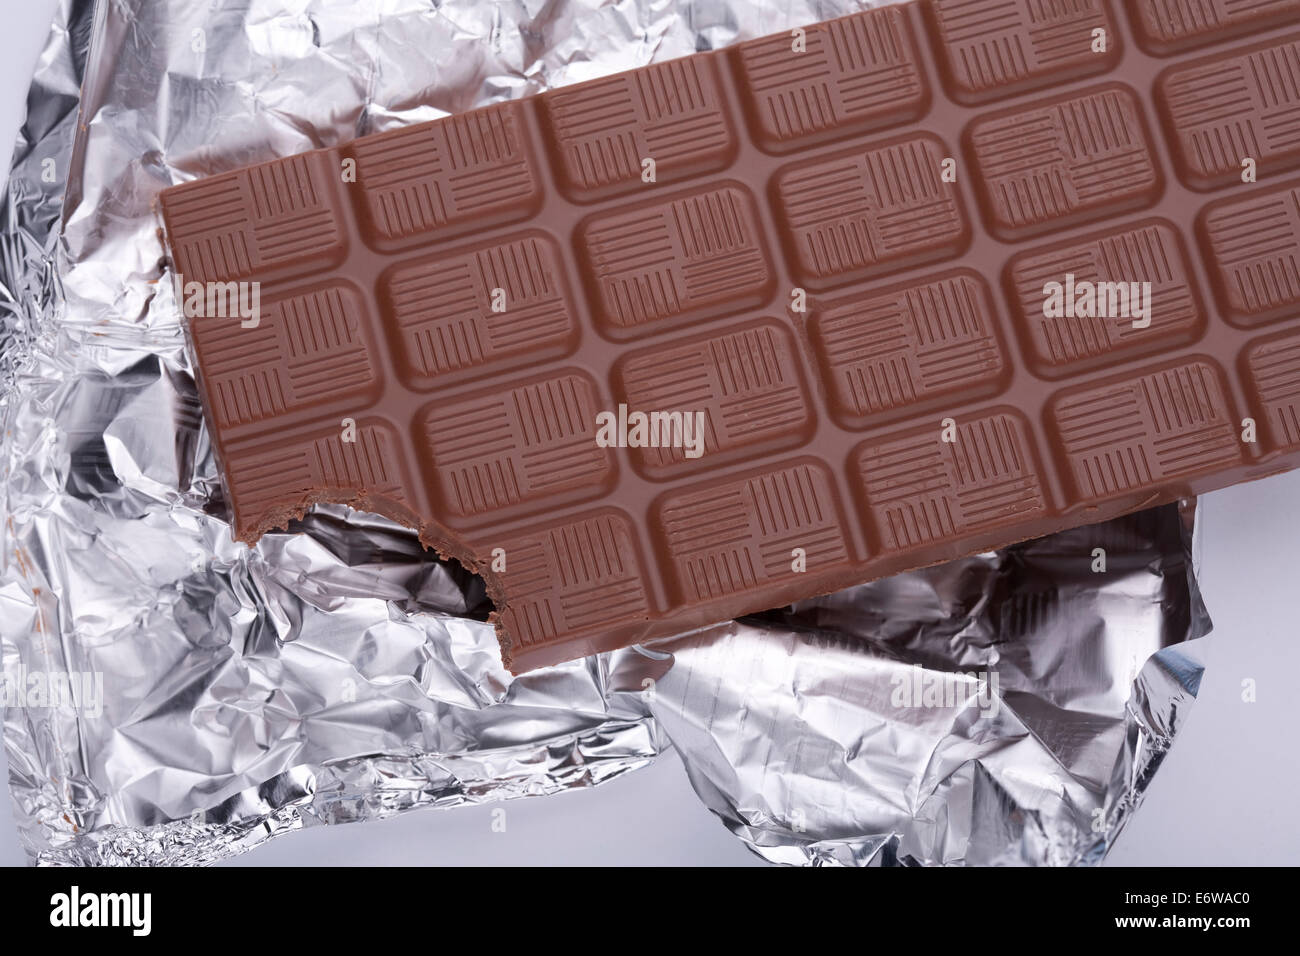 Delicius chocolate bar. Stock Photo